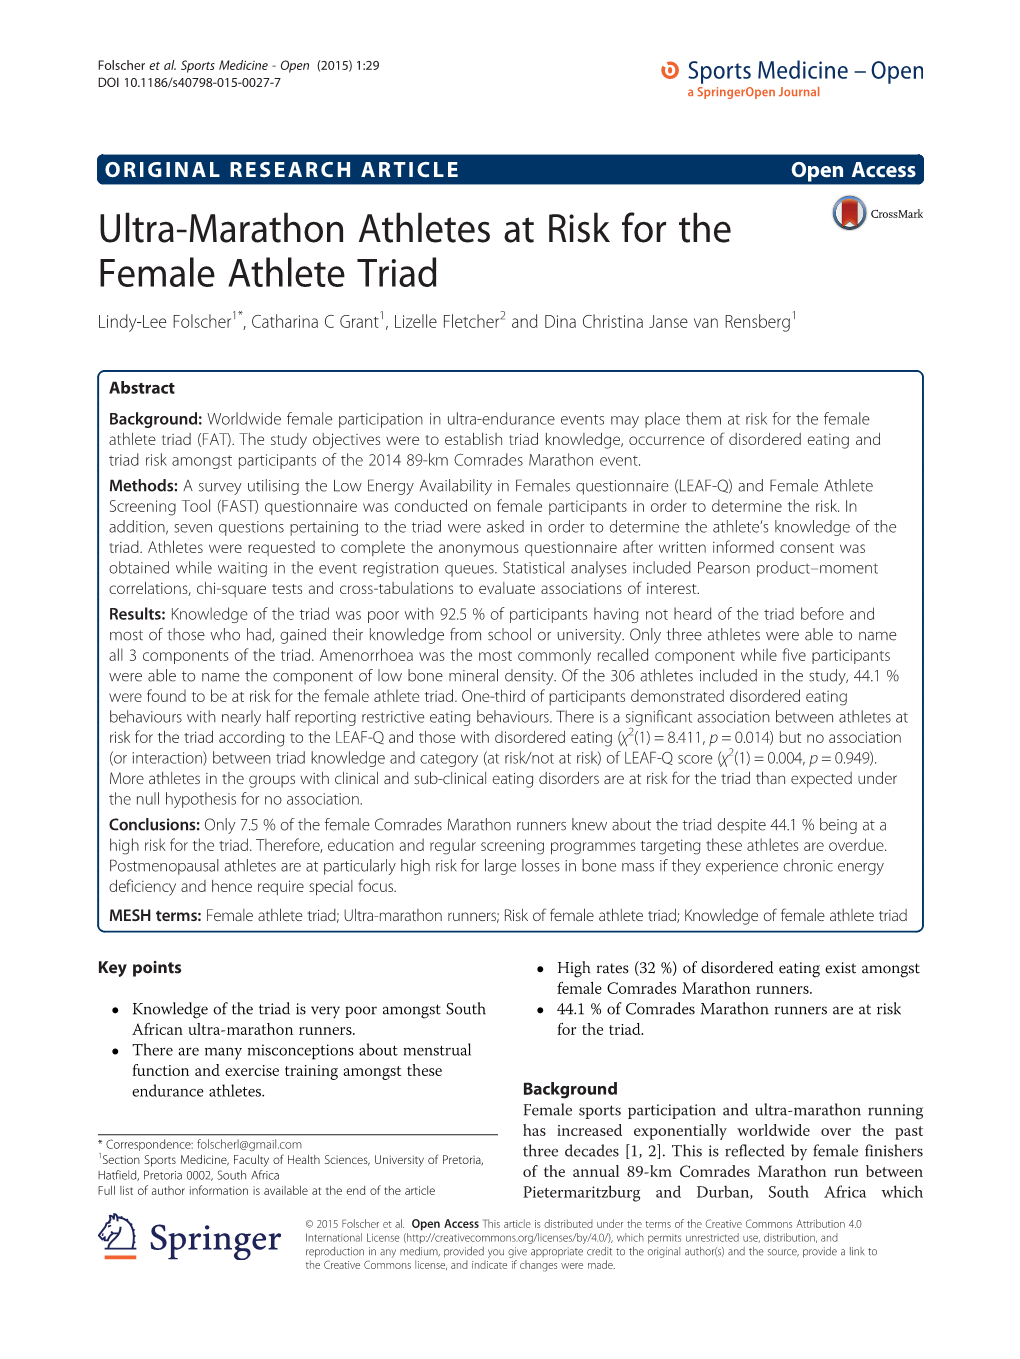 Ultra-Marathon Athletes at Risk for the Female Athlete Triad Lindy-Lee Folscher1*, Catharina C Grant1, Lizelle Fletcher2 and Dina Christina Janse Van Rensberg1